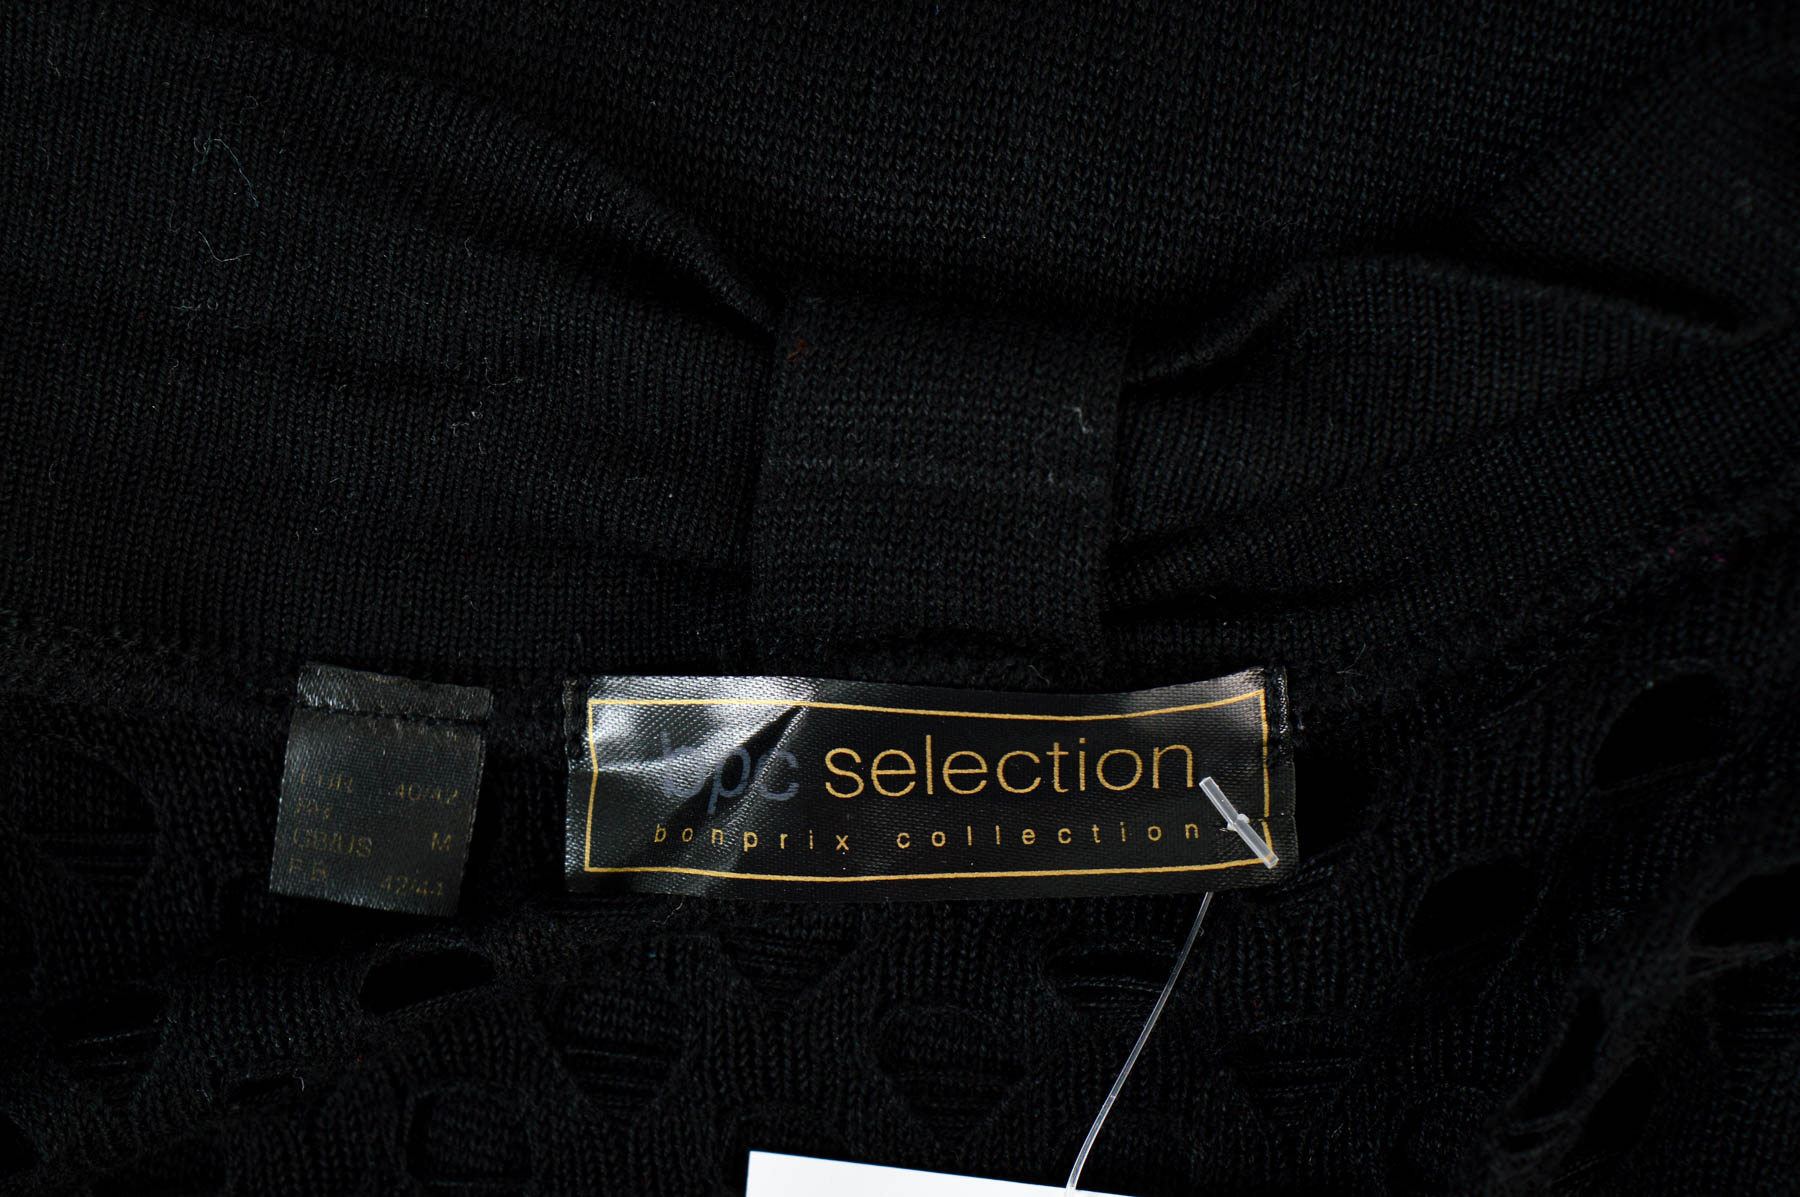 Women's cardigan - Bpc selection bonprix collection - 2